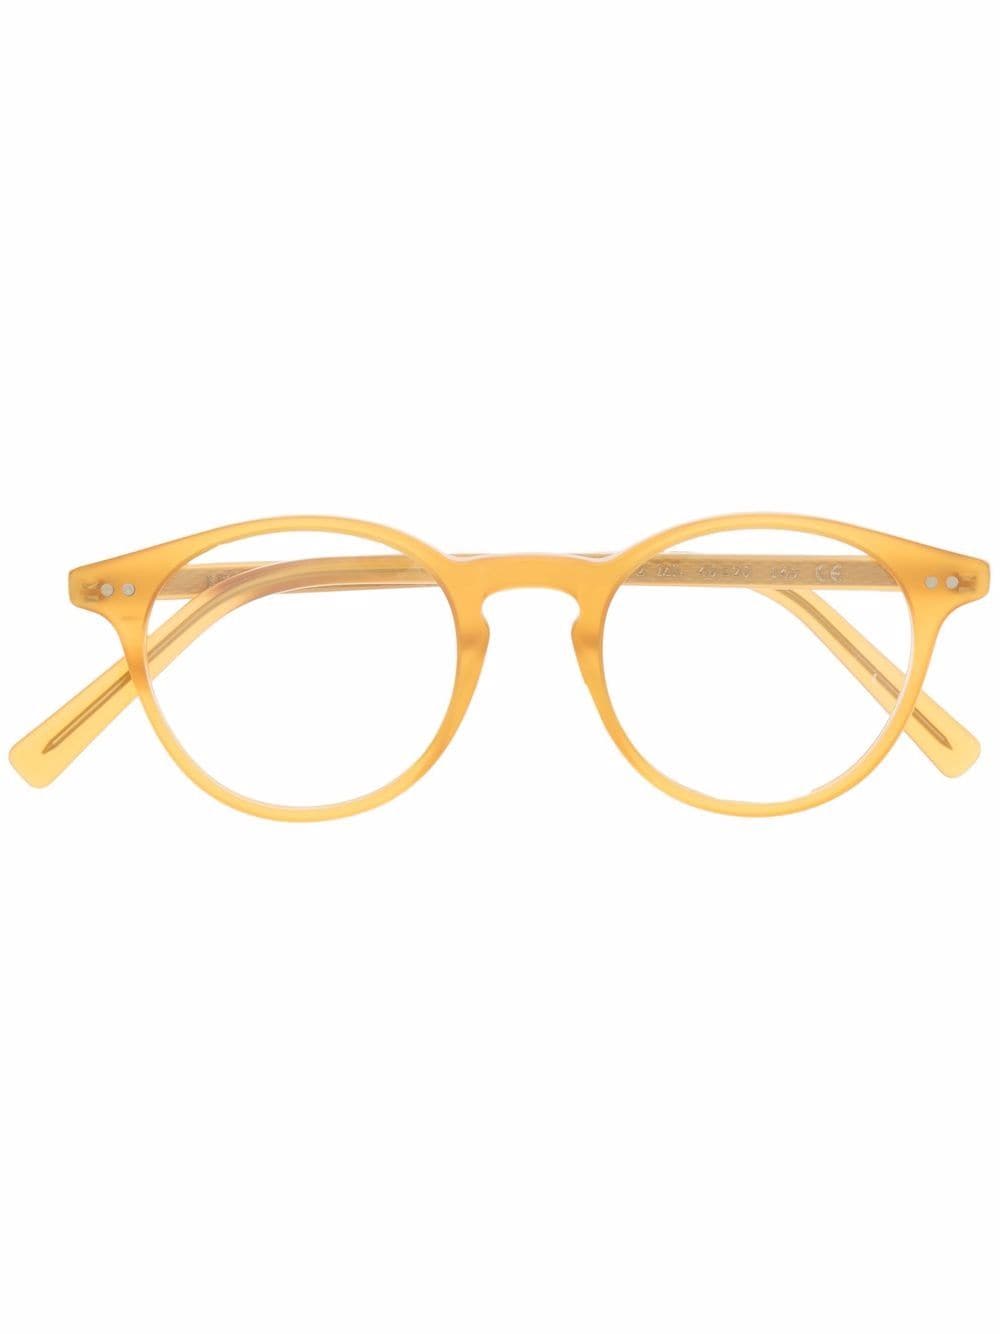 Epos round frame glasses